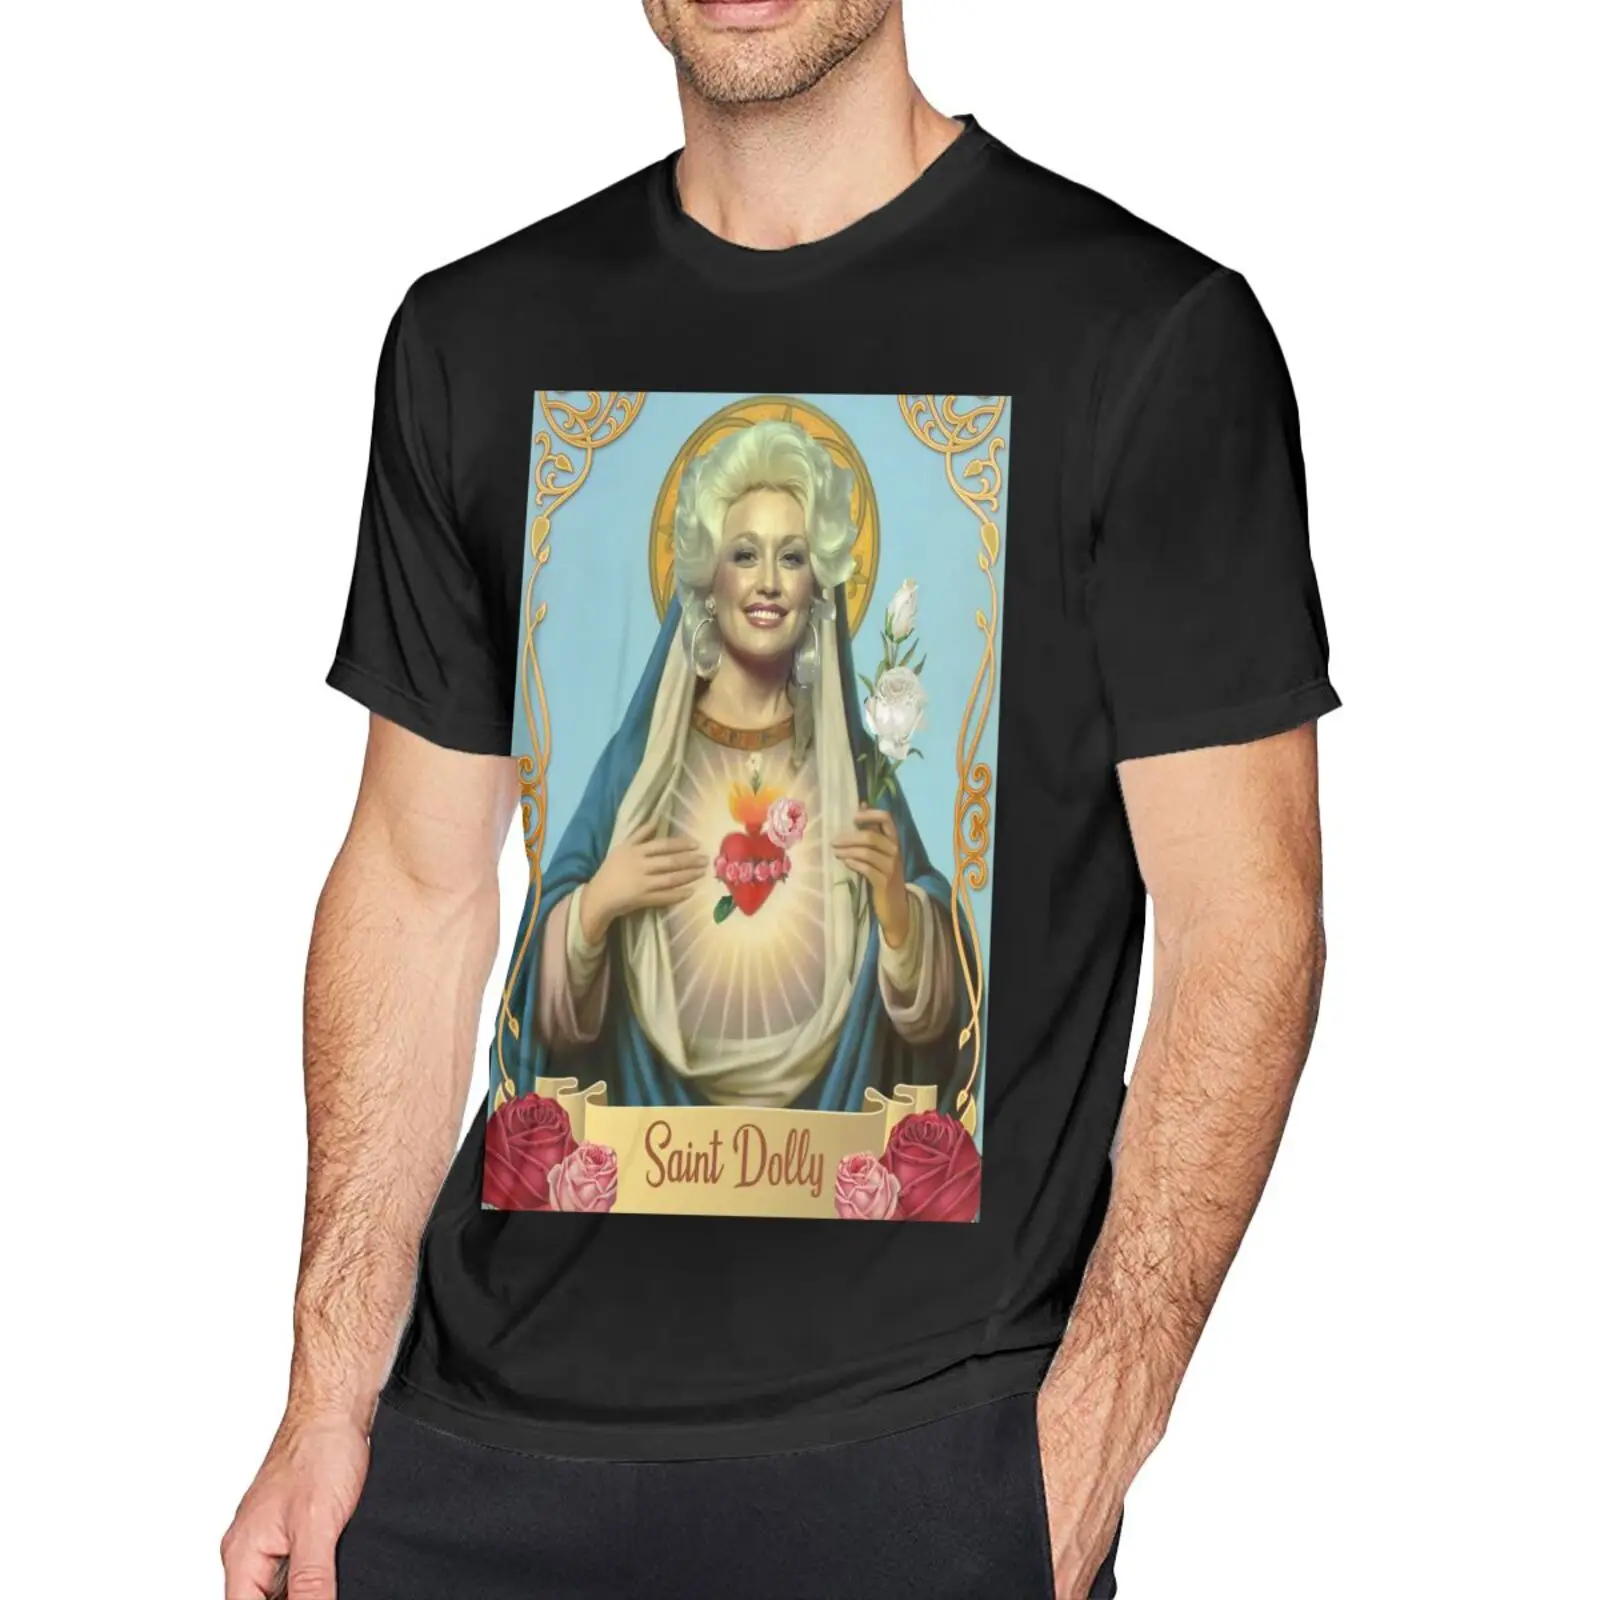 

Мужская футболка с надписью «Saint Dolly Parton God»